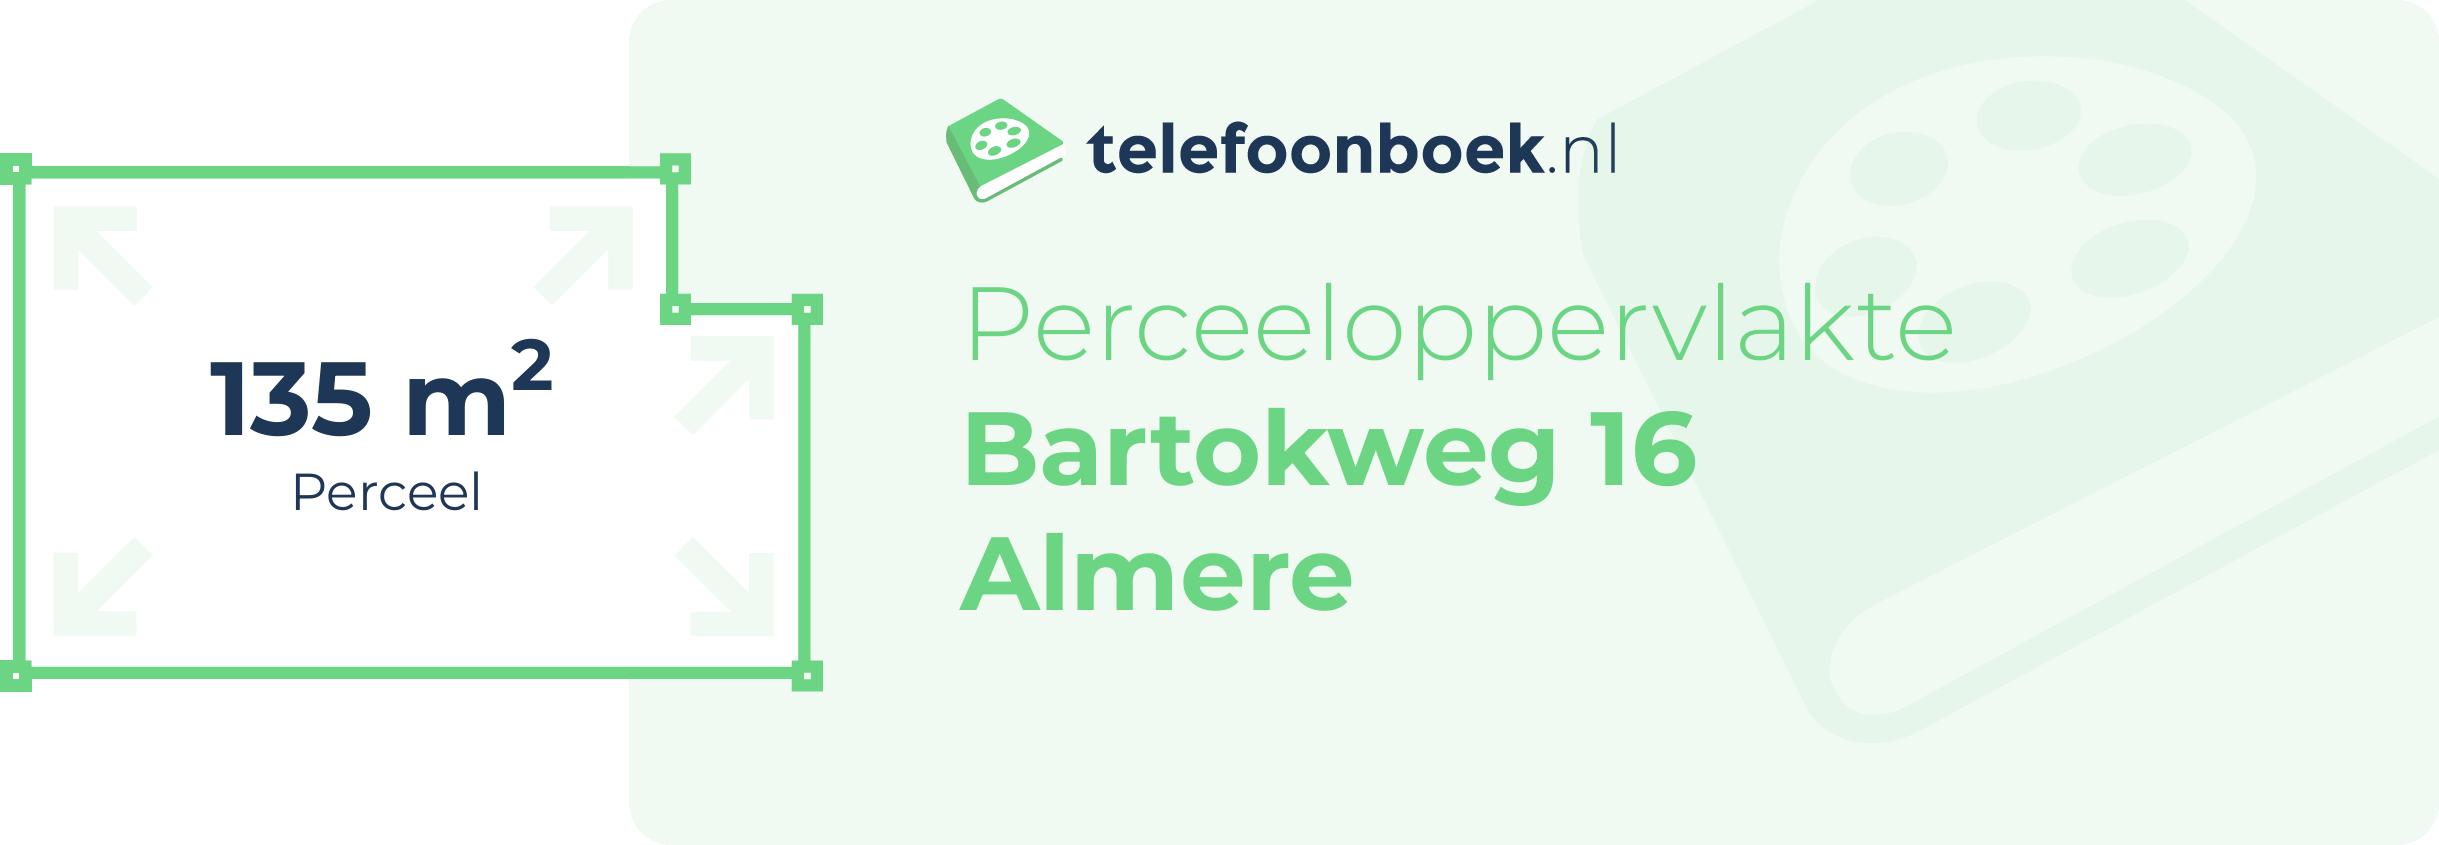 Perceeloppervlakte Bartokweg 16 Almere